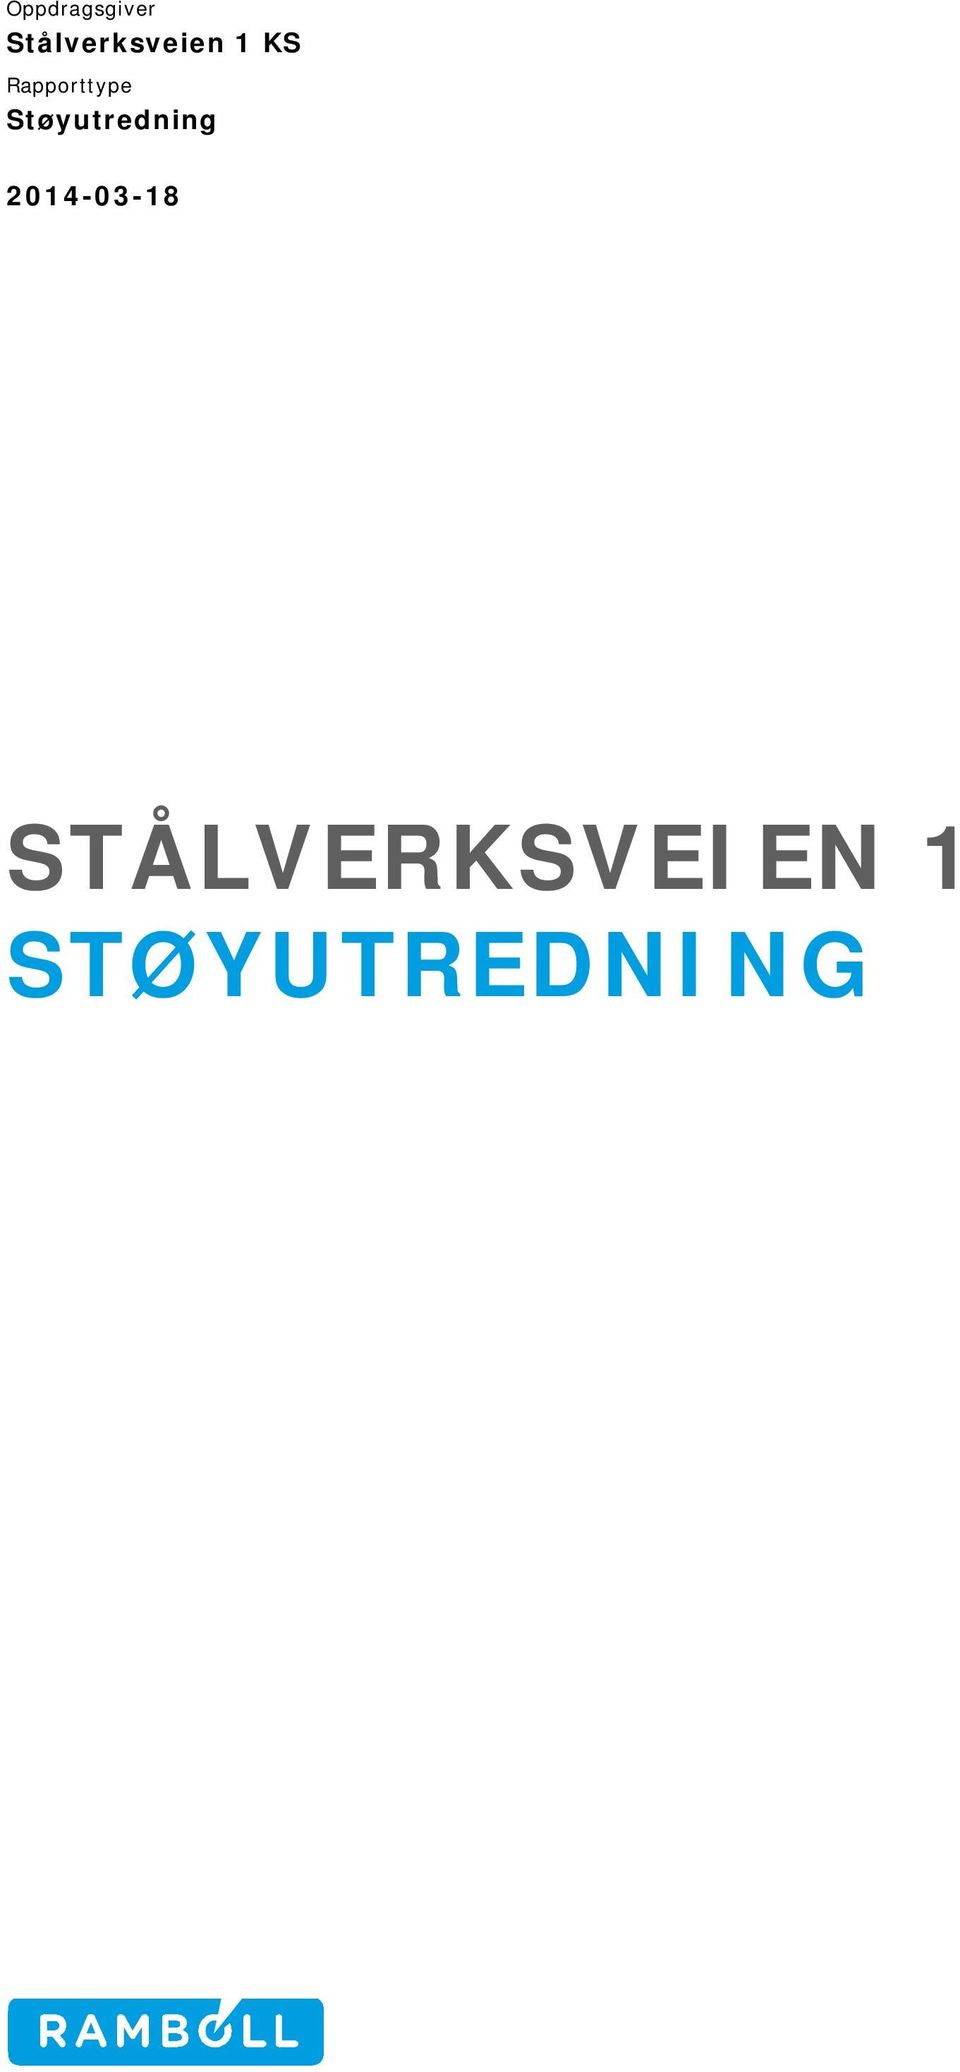 Rapporttype Støyutredning